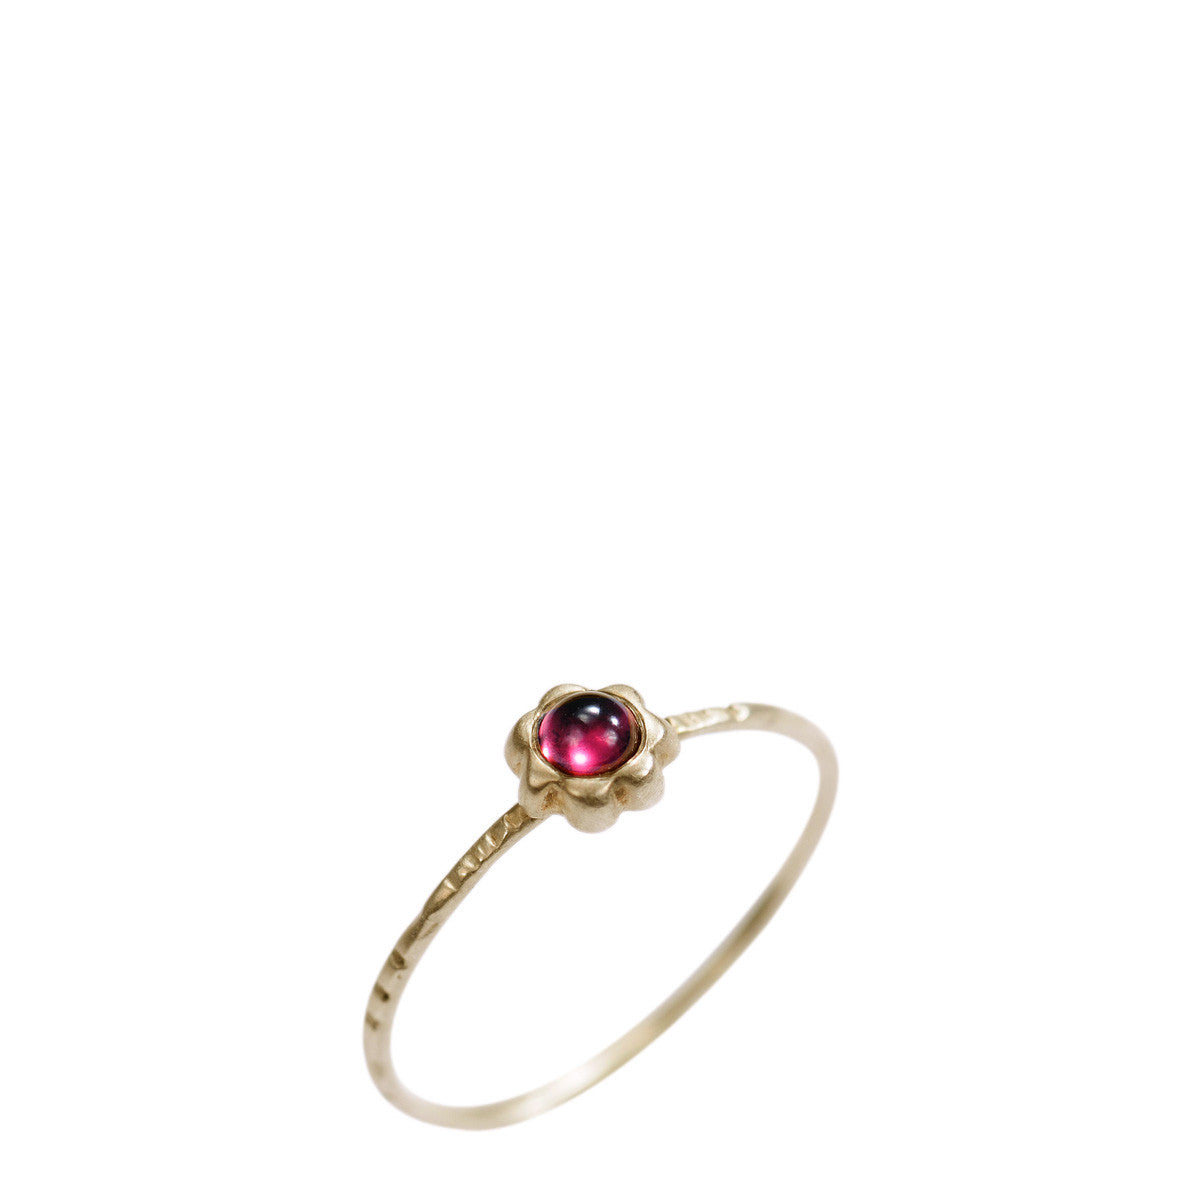 10K Gold Star Flower Ring with Garnet